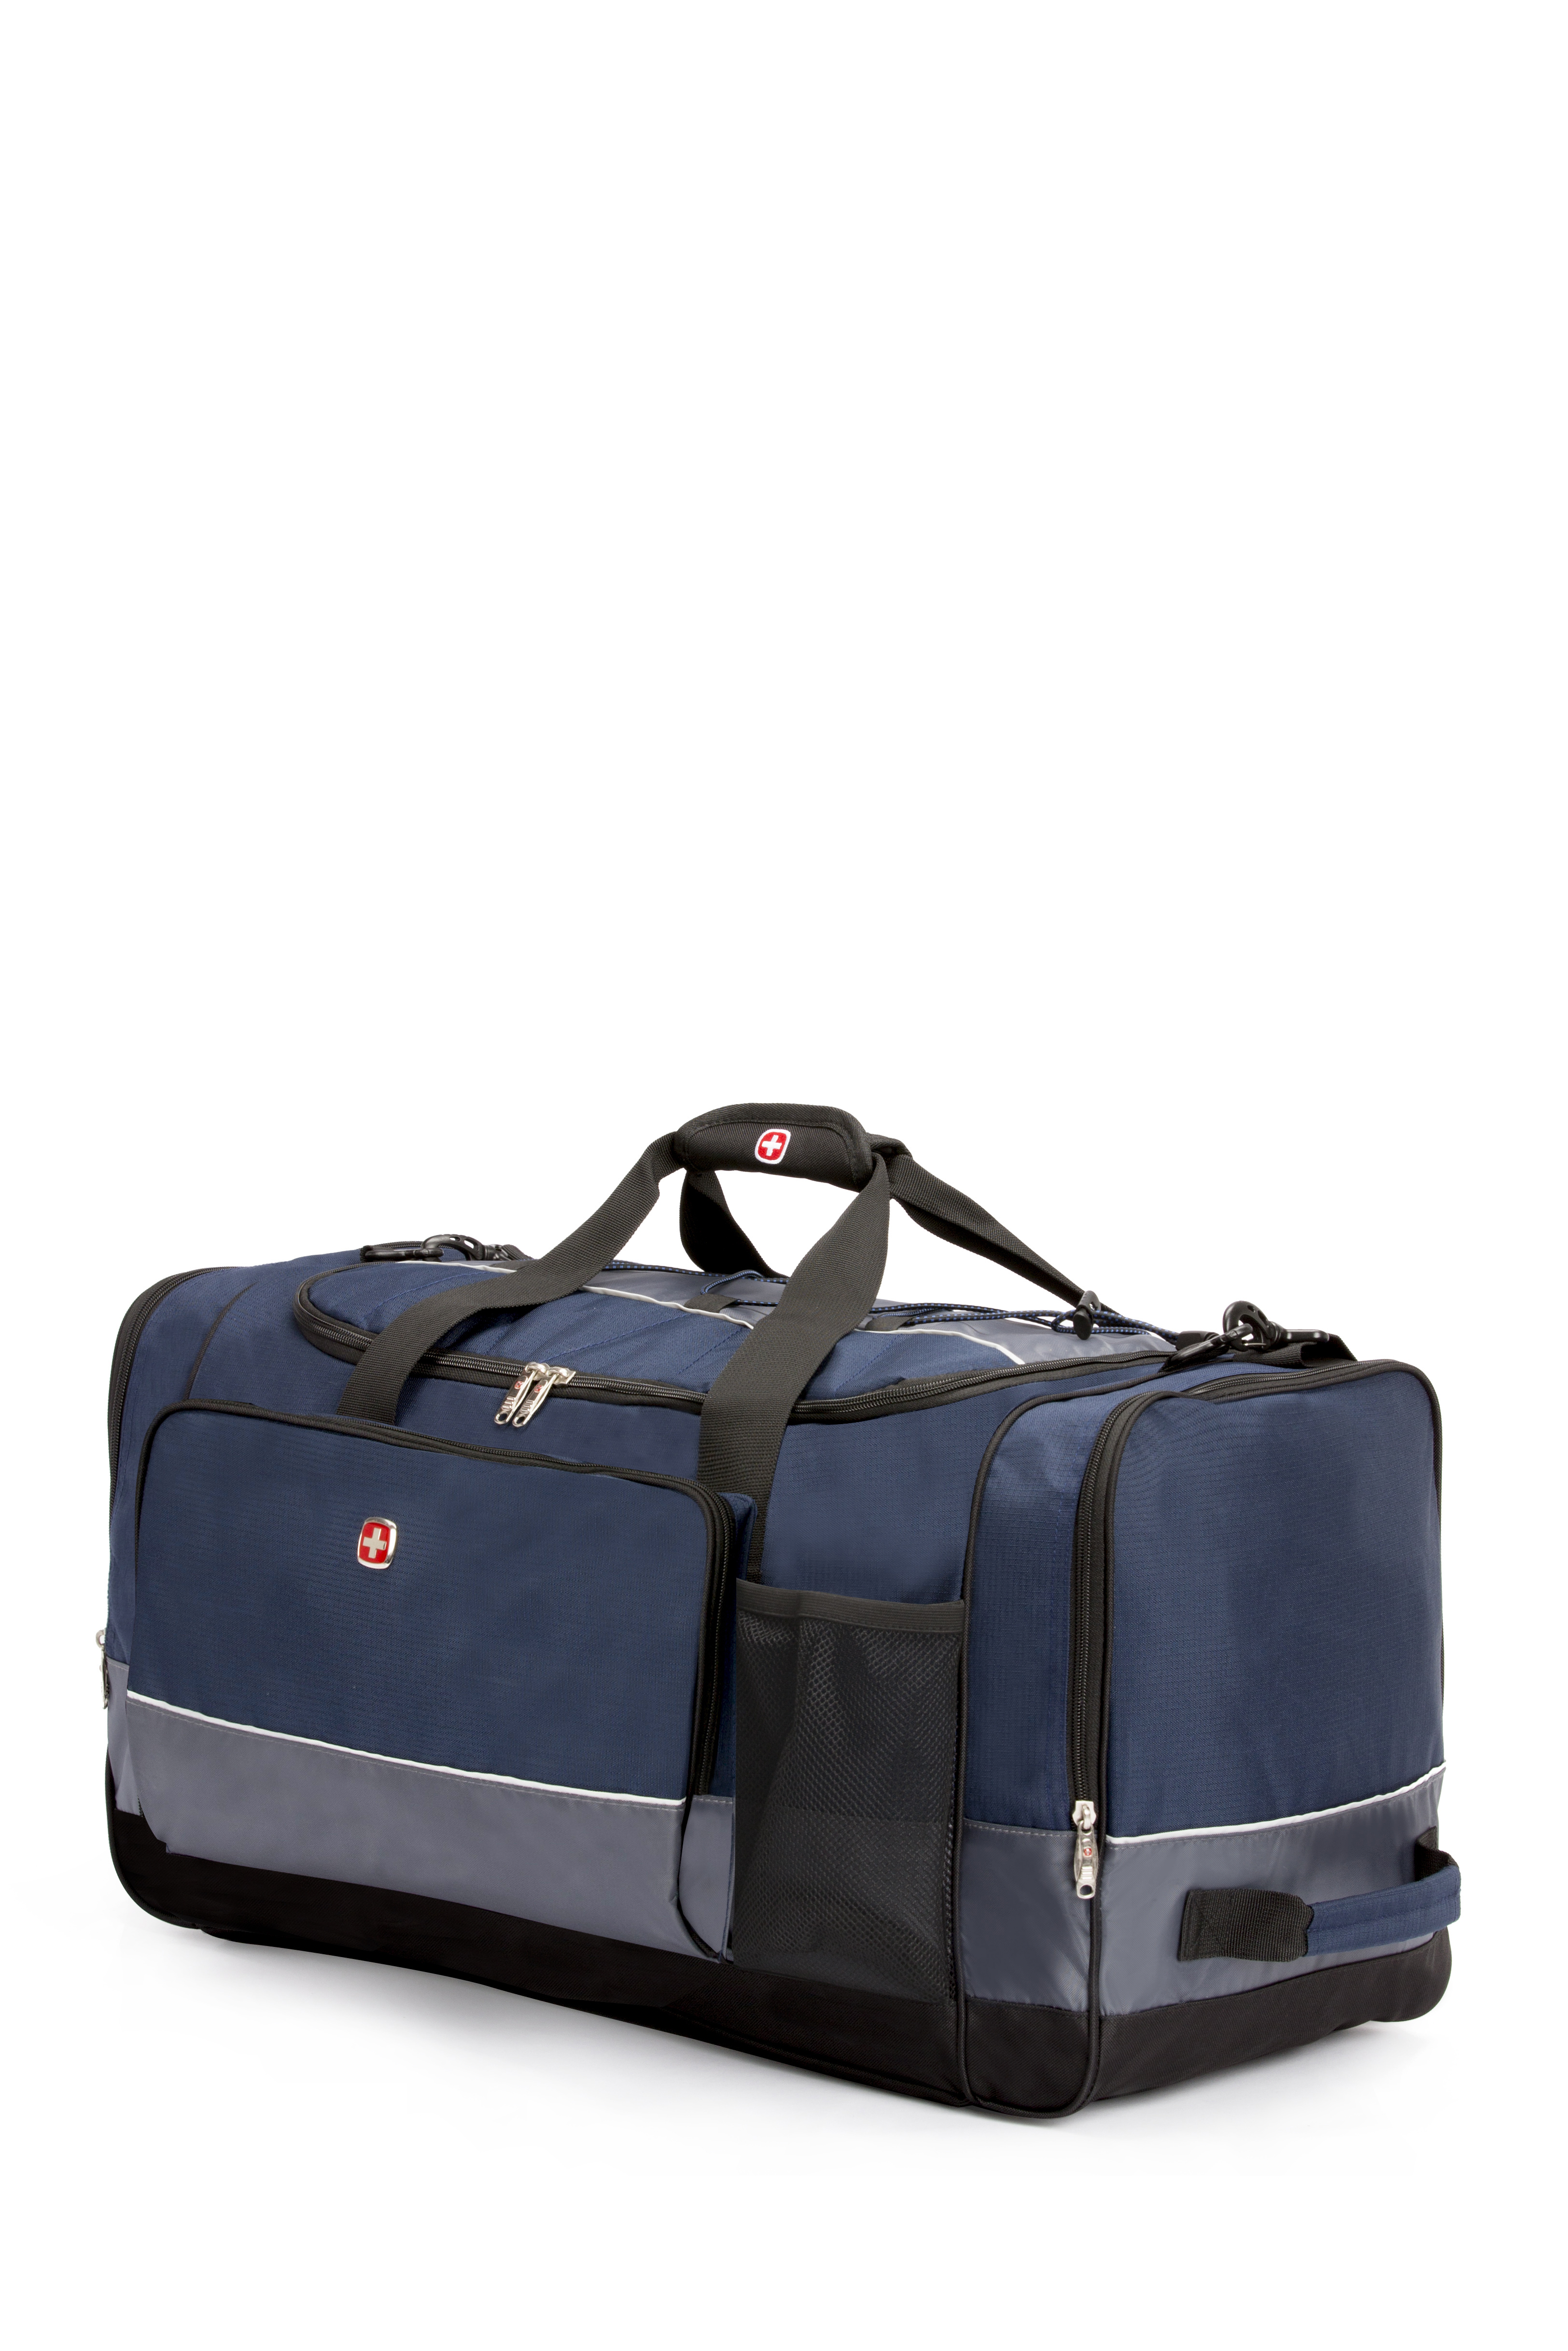 SwissGear Unisex Adult Travel Duffle Bags GreyBlack 28 Inch Travel Duffle  Bags Buy Online at Best Price in UAE  Amazonae